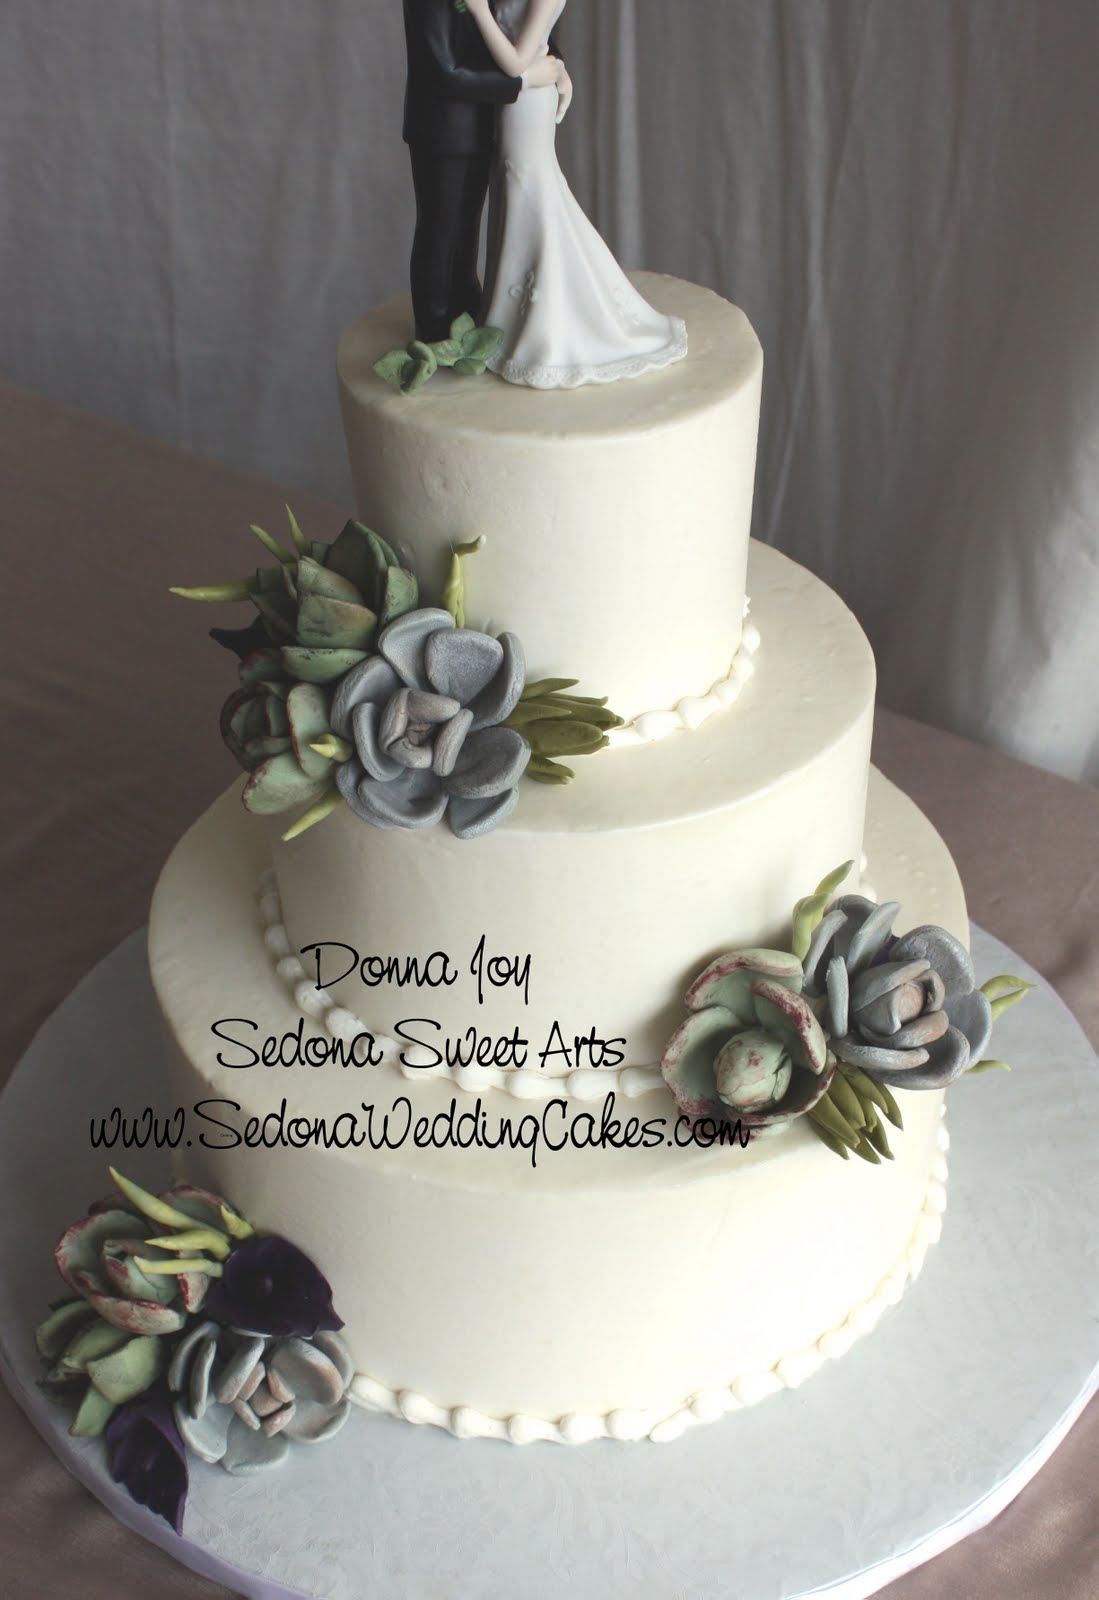 floral wedding cake images  Joy's creations at Sedona Wedding Cakes.or Sedona Sweet Arts.com